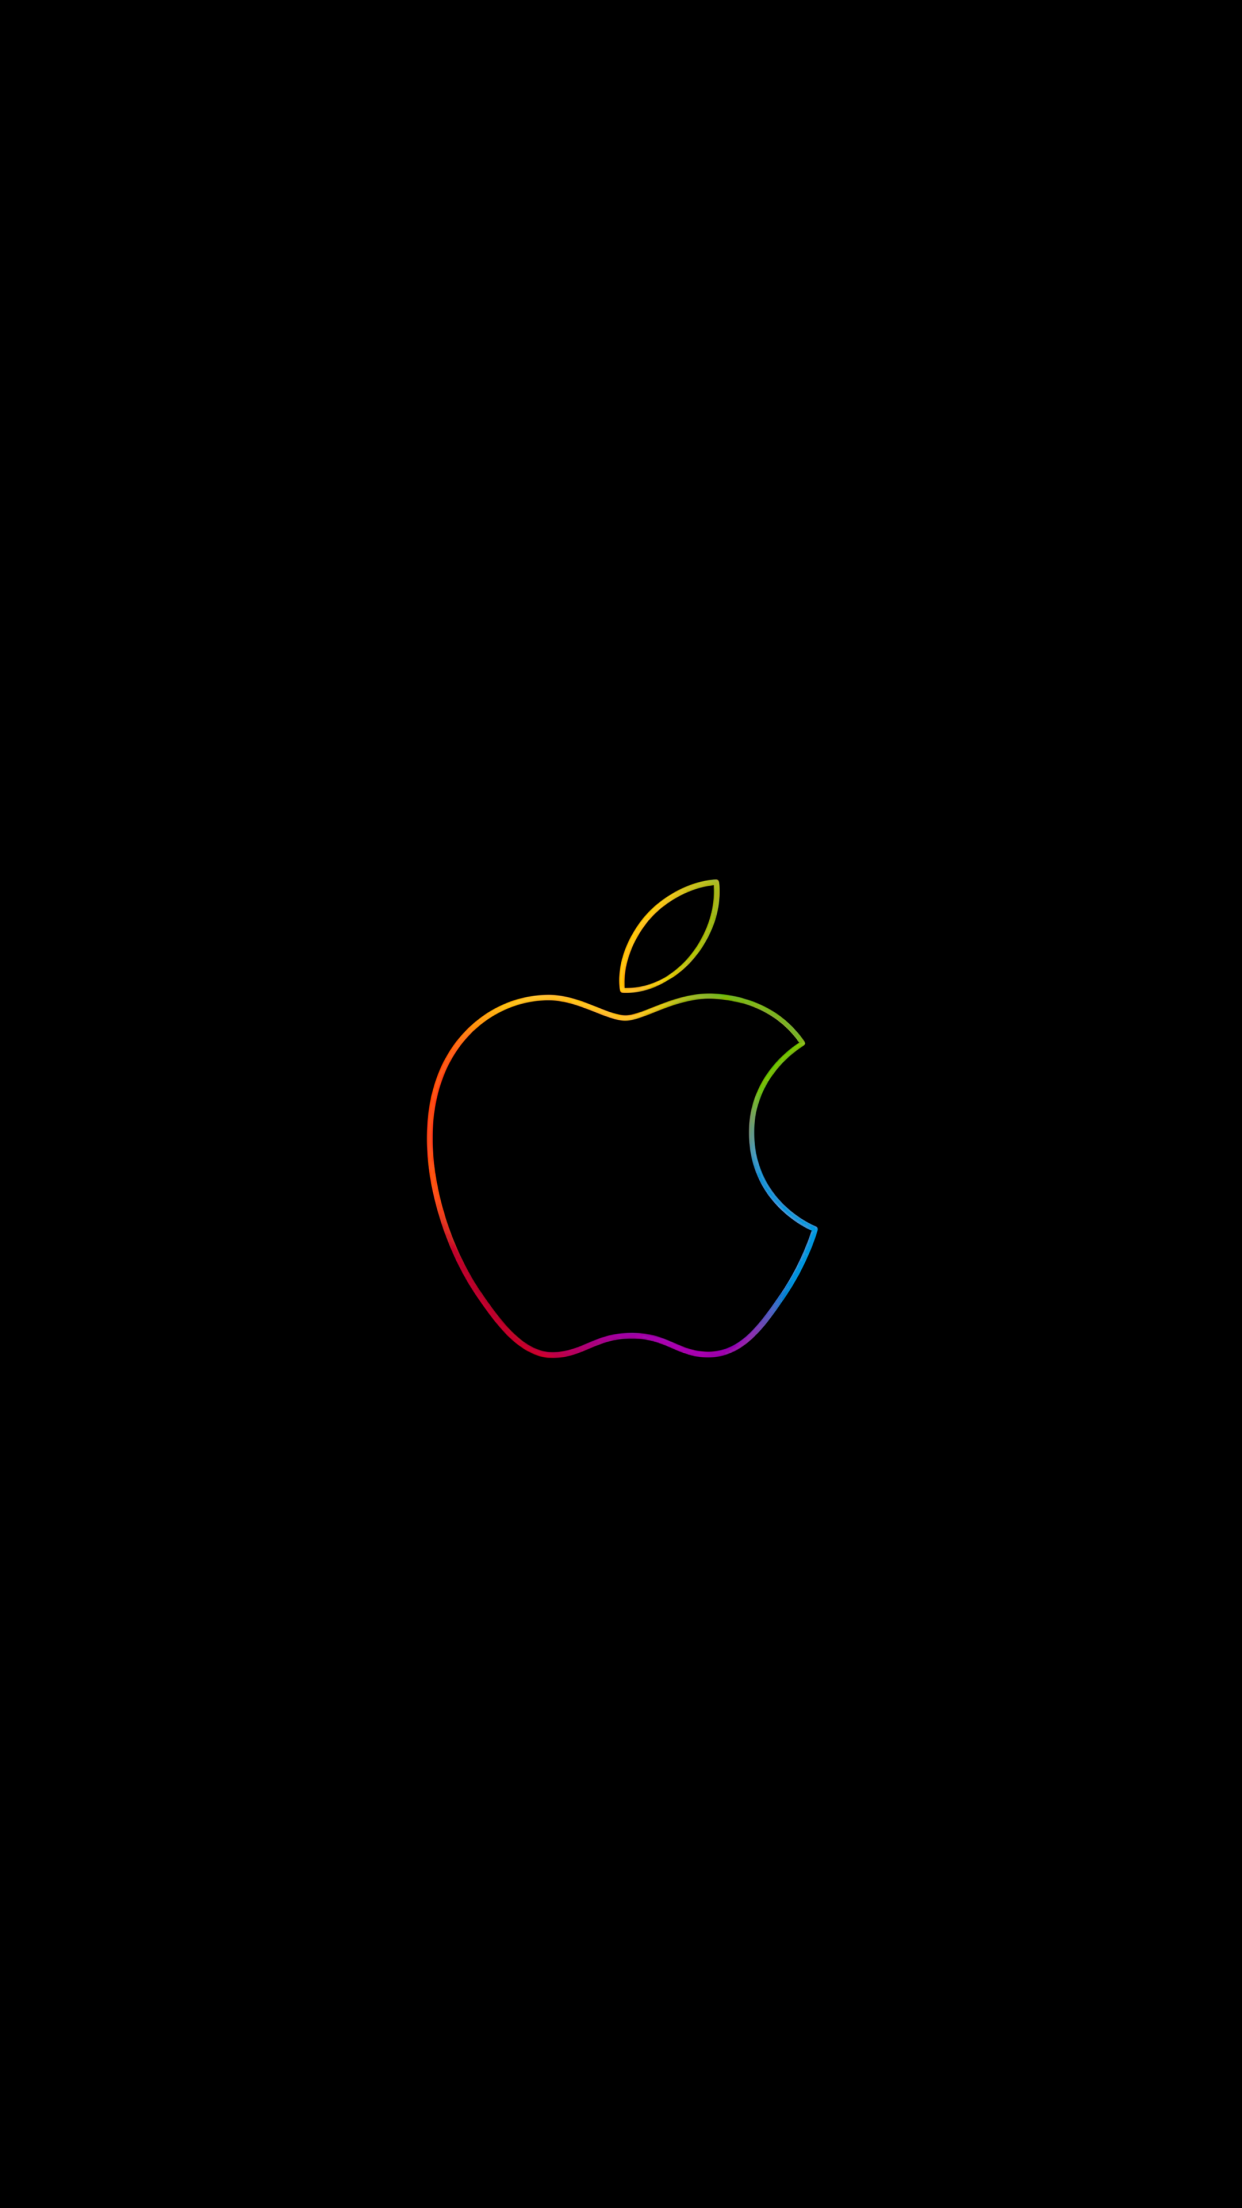 Apple logo 4K Wallpaper, Colorful, Outline, Black background, iPad, HD, Technology, #789